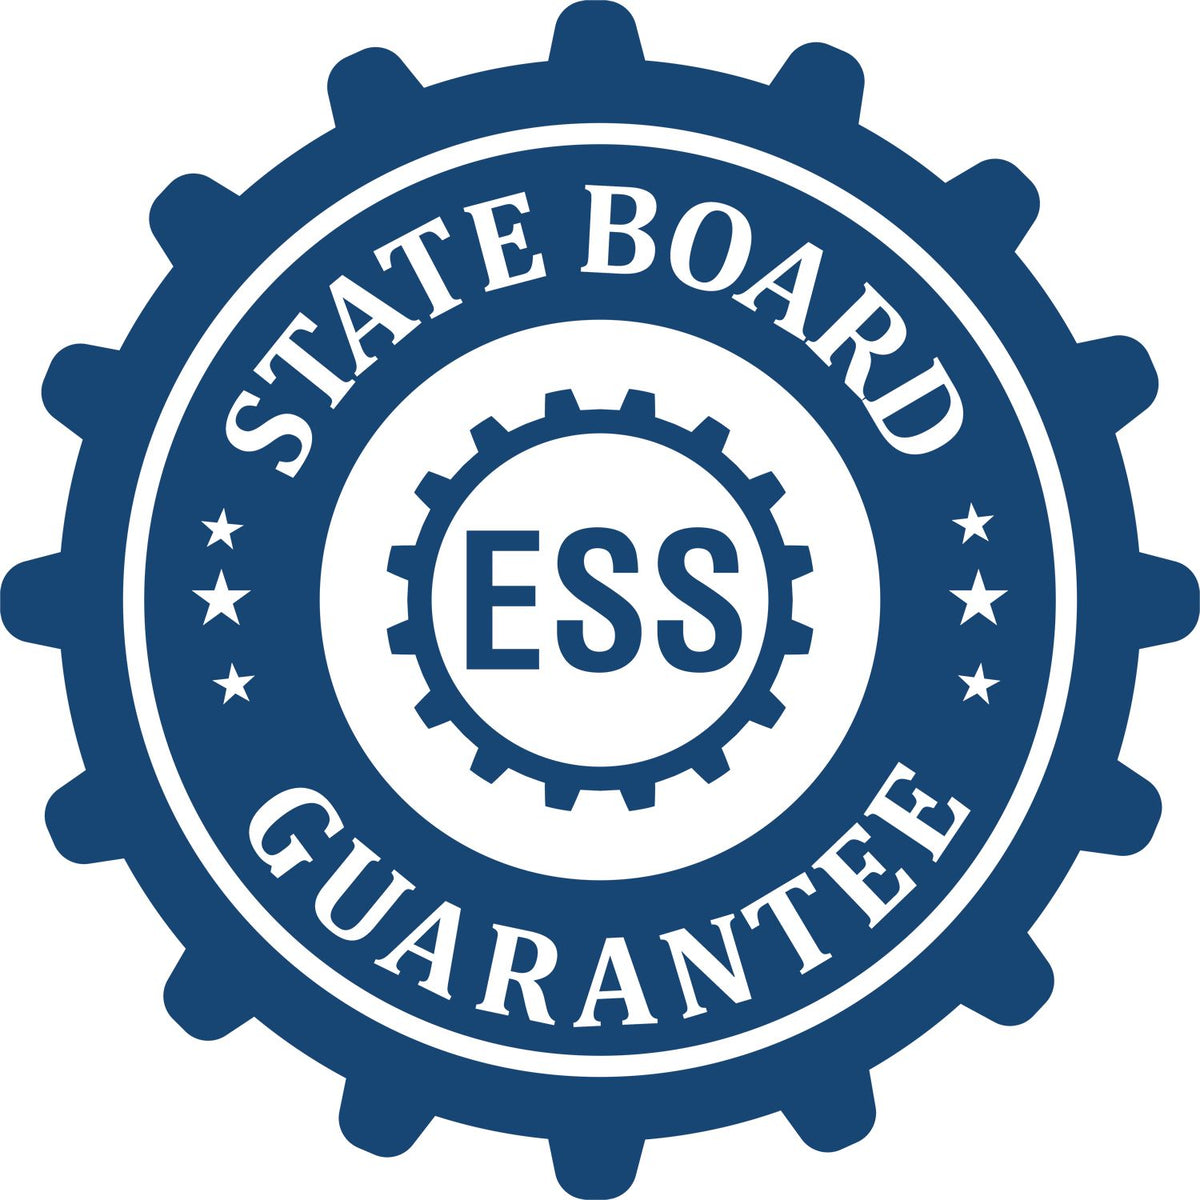 An emblem in a gear shape illustrating a state board guarantee for the Hybrid Nebraska Geologist Seal